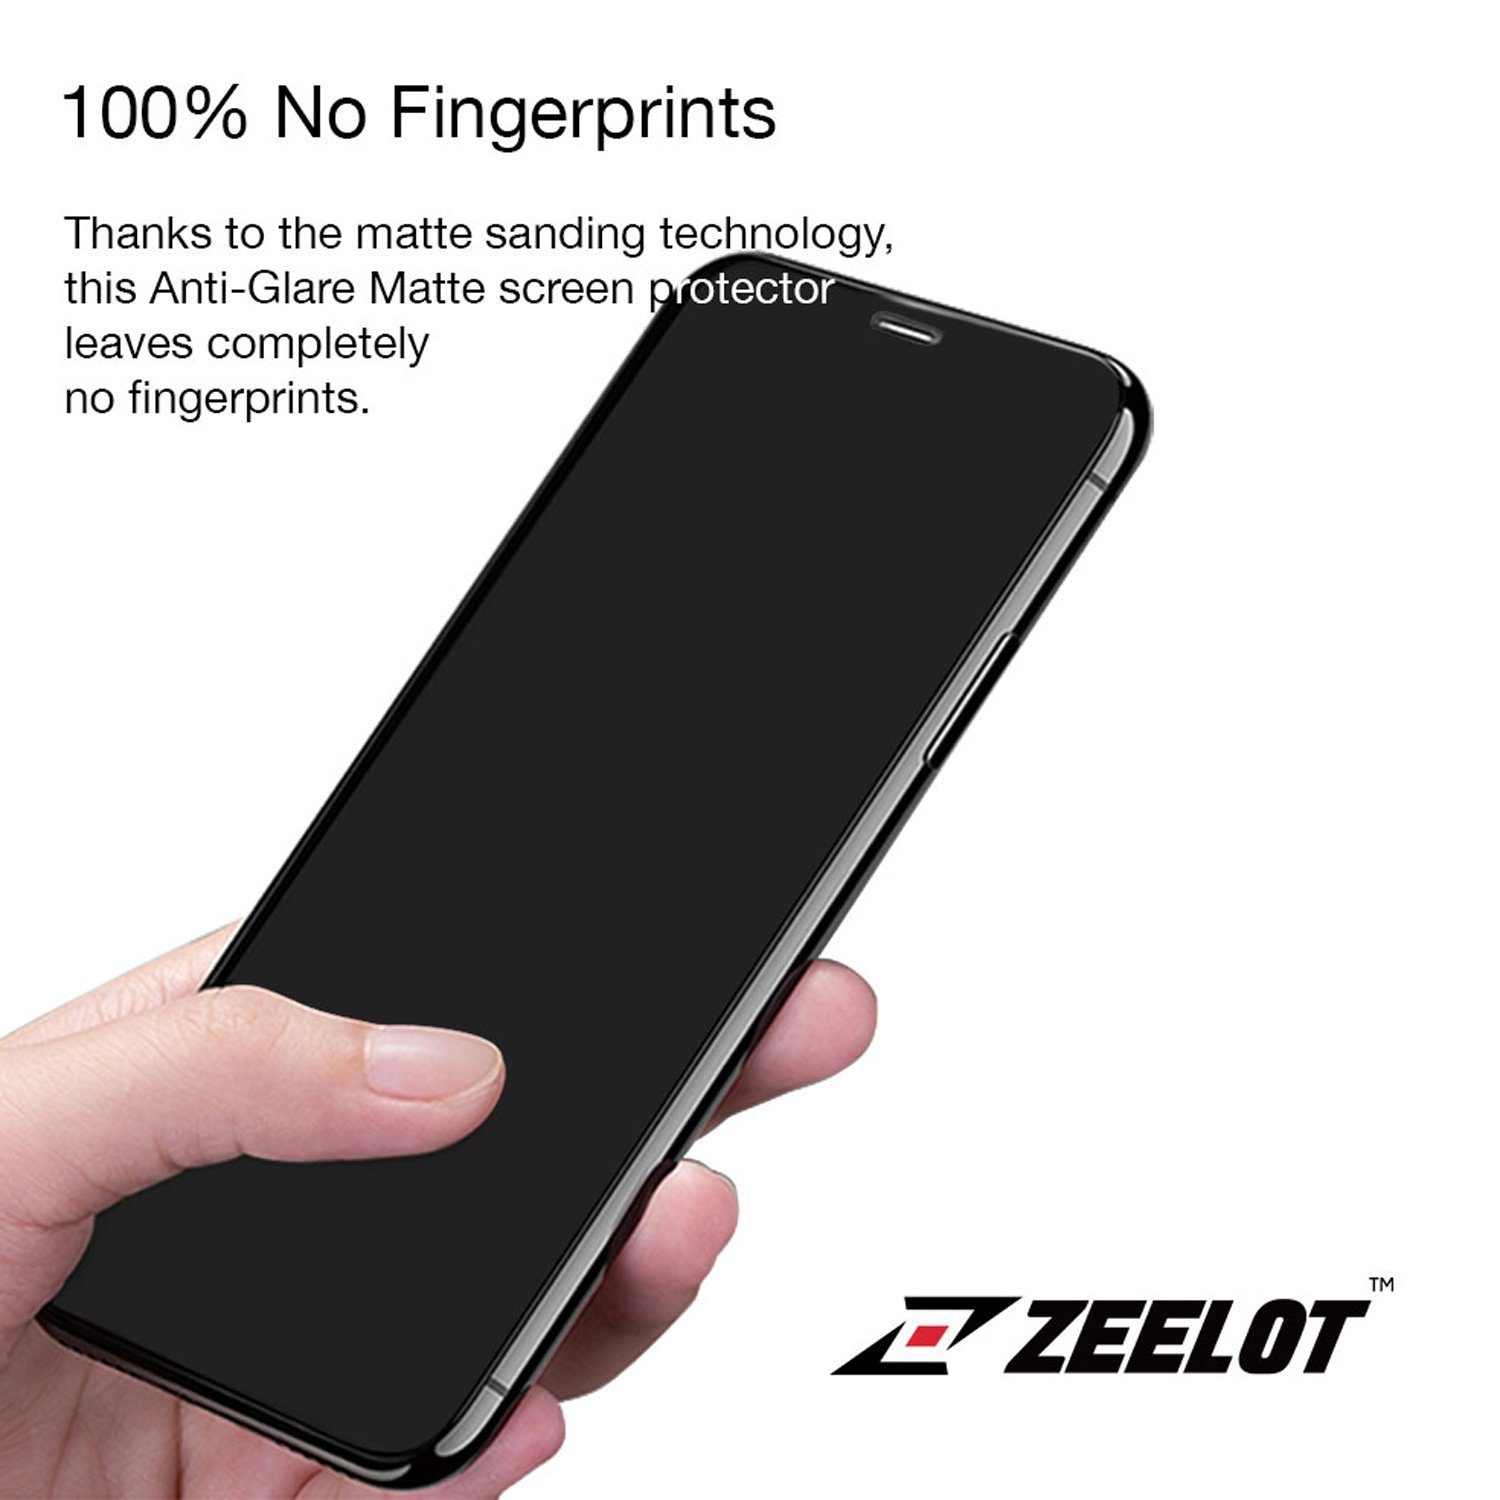 ZEELOT PureGlass 2.5D Tempered Glass Screen Protector for Huawei P30 (2019), Clear Tempered Glass ZEELOT 